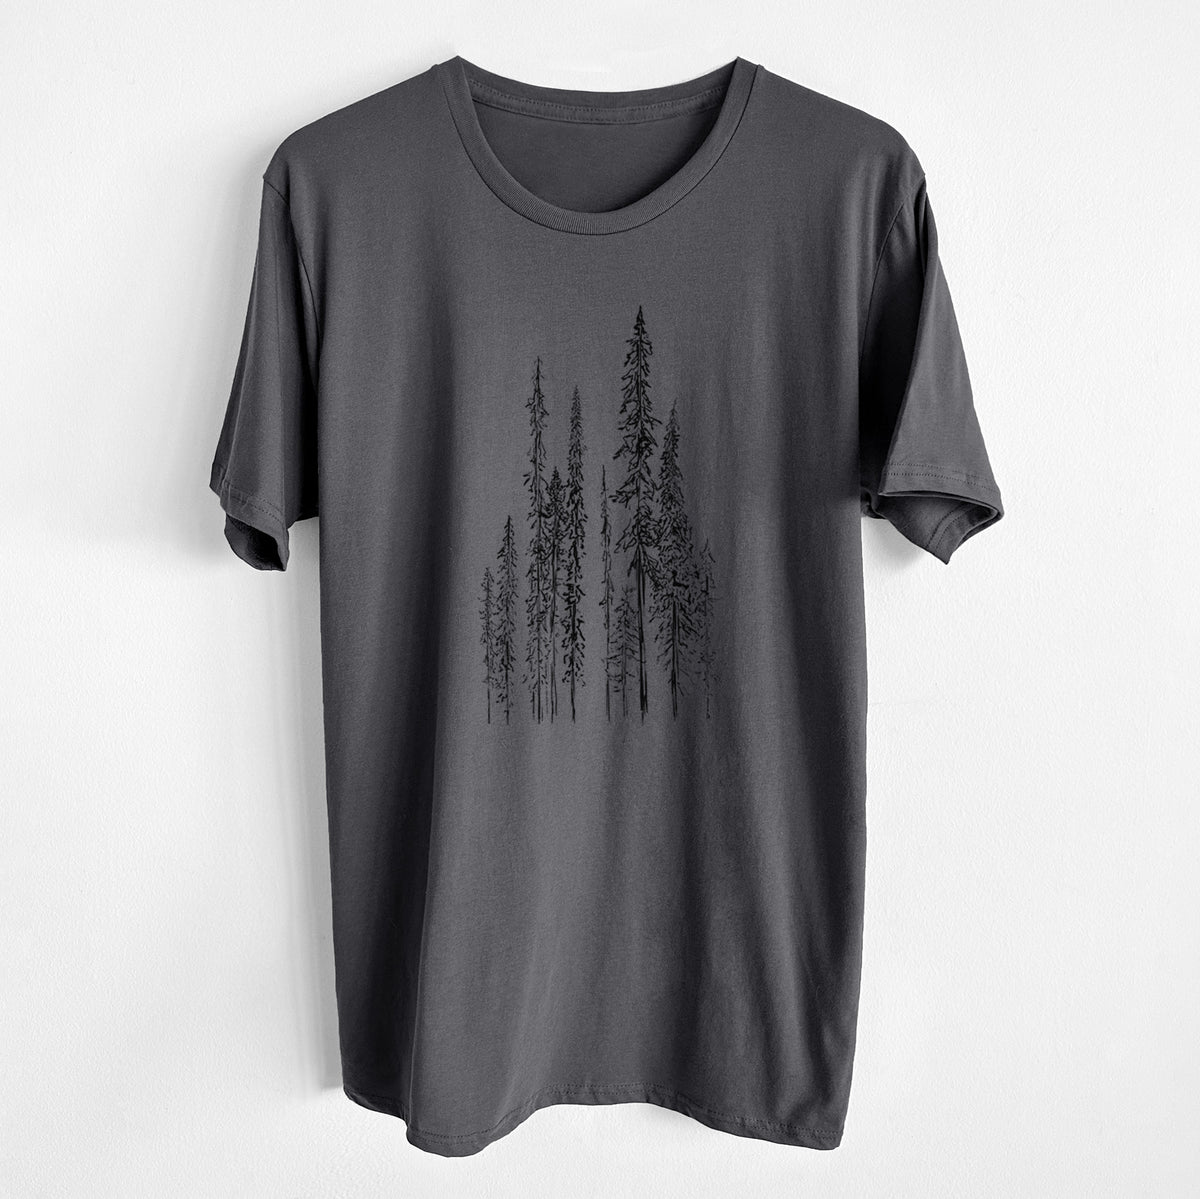 Black Spruce (Picea mariana) - Unisex Crewneck - Made in USA - 100% Organic Cotton